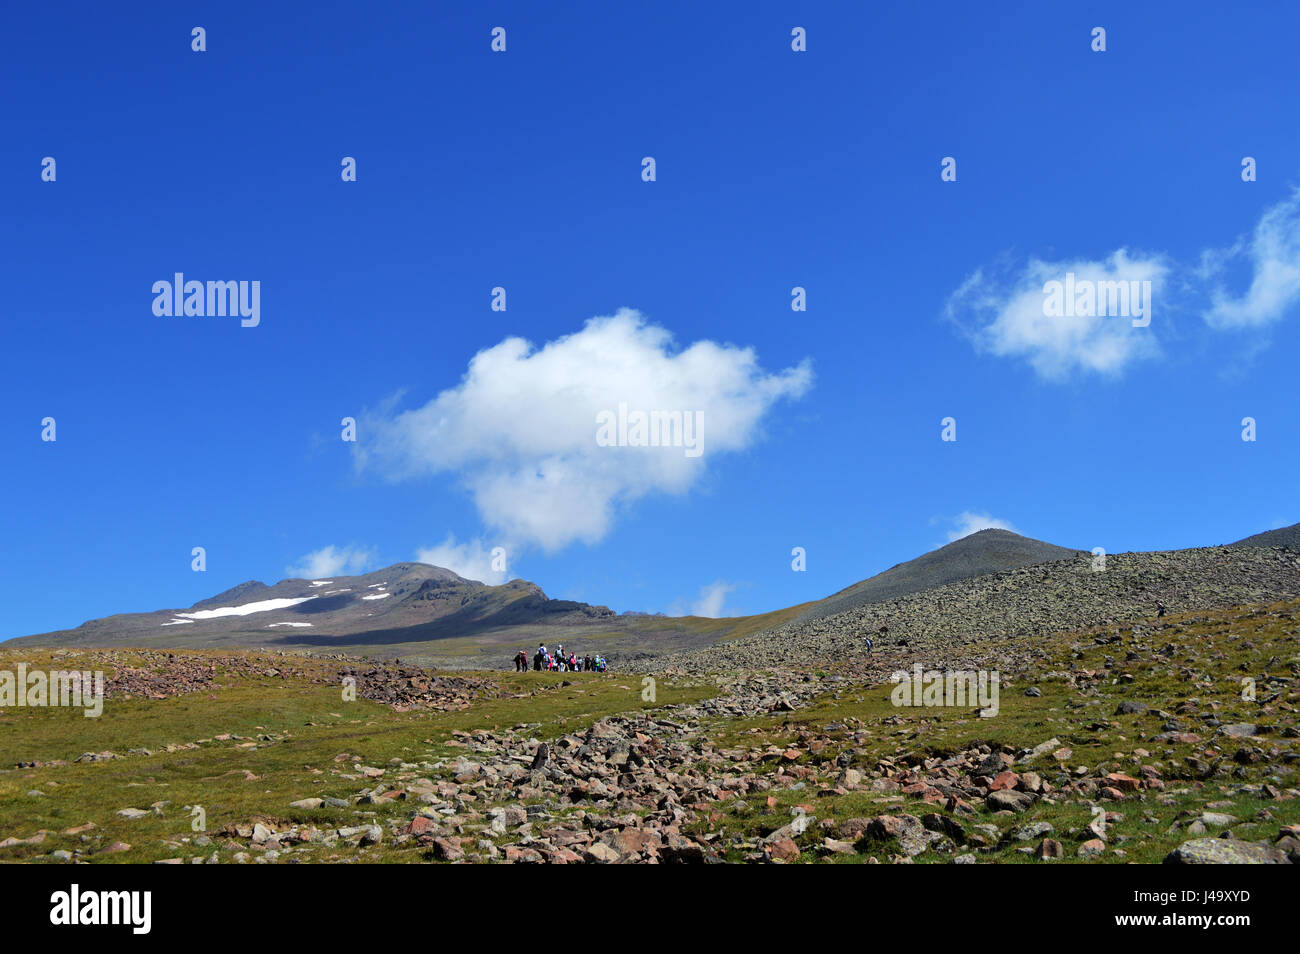 Hiking in the mountains - Mount Aragats, Armenia Stock Photo